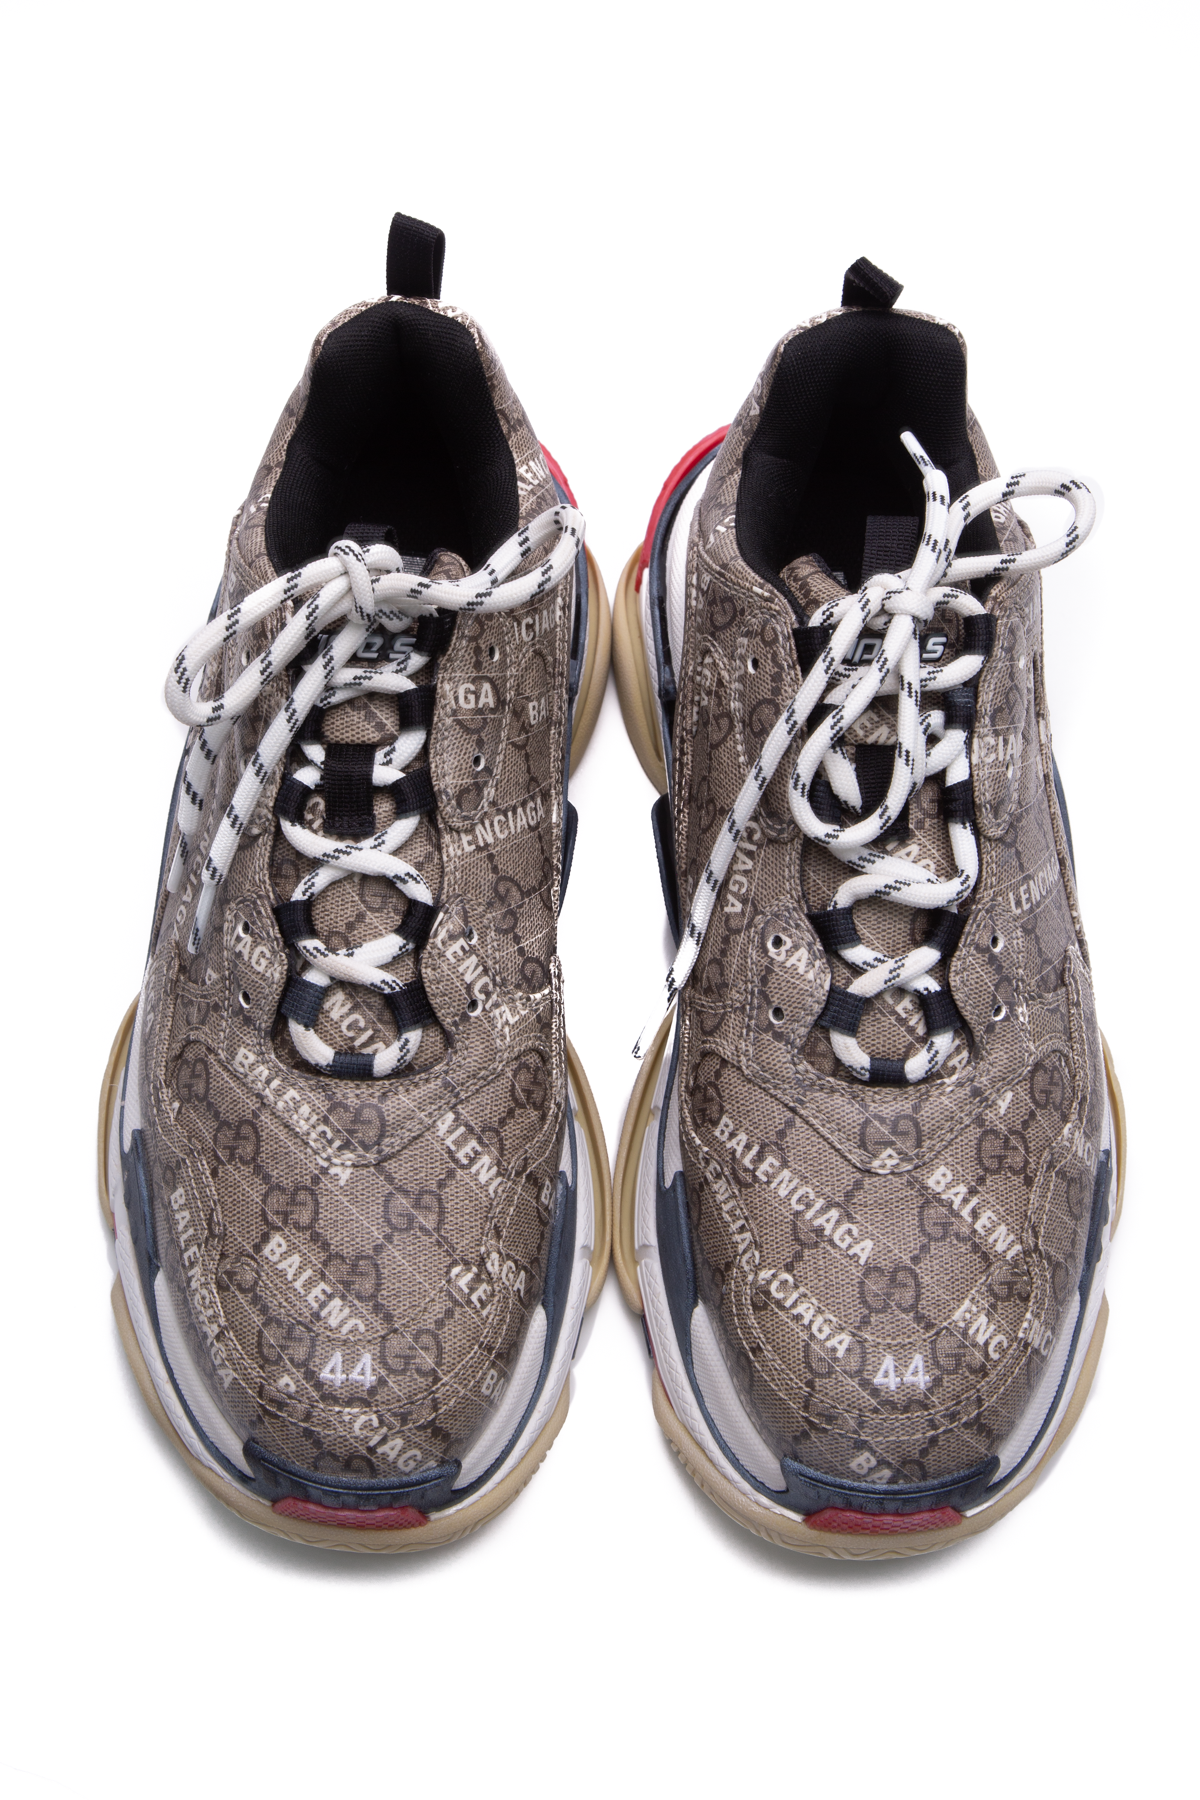 Gucci X Balenciaga Triple S Sneakers - US Size 11